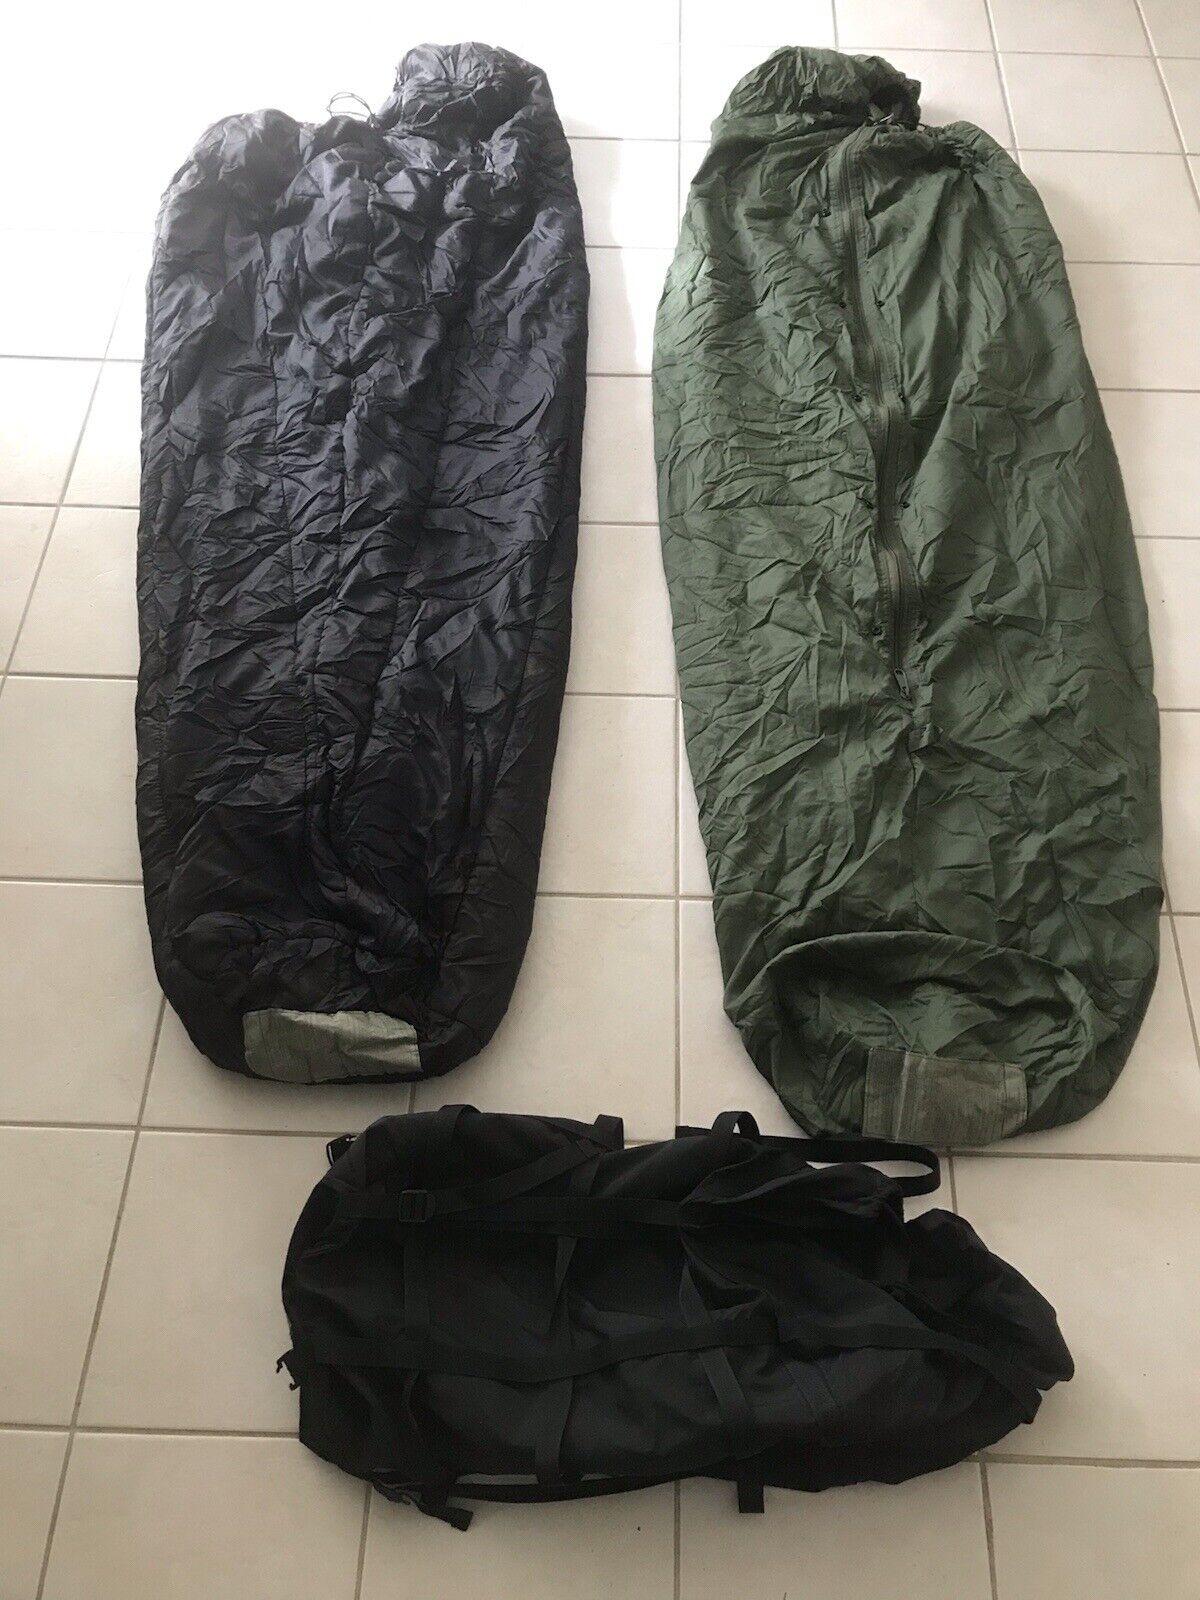 US Military 3 Piece Modular Sleeping Bag Sleep System. I have multiple available